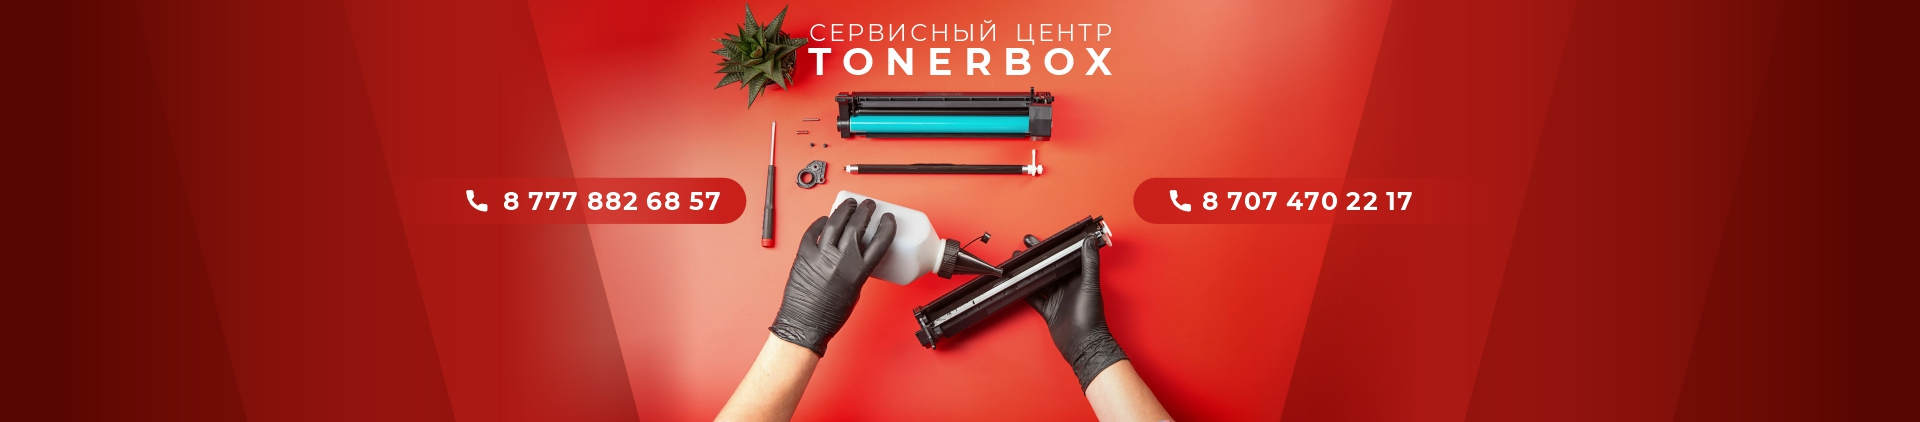 Сервисный-центр-Tonerbox-2